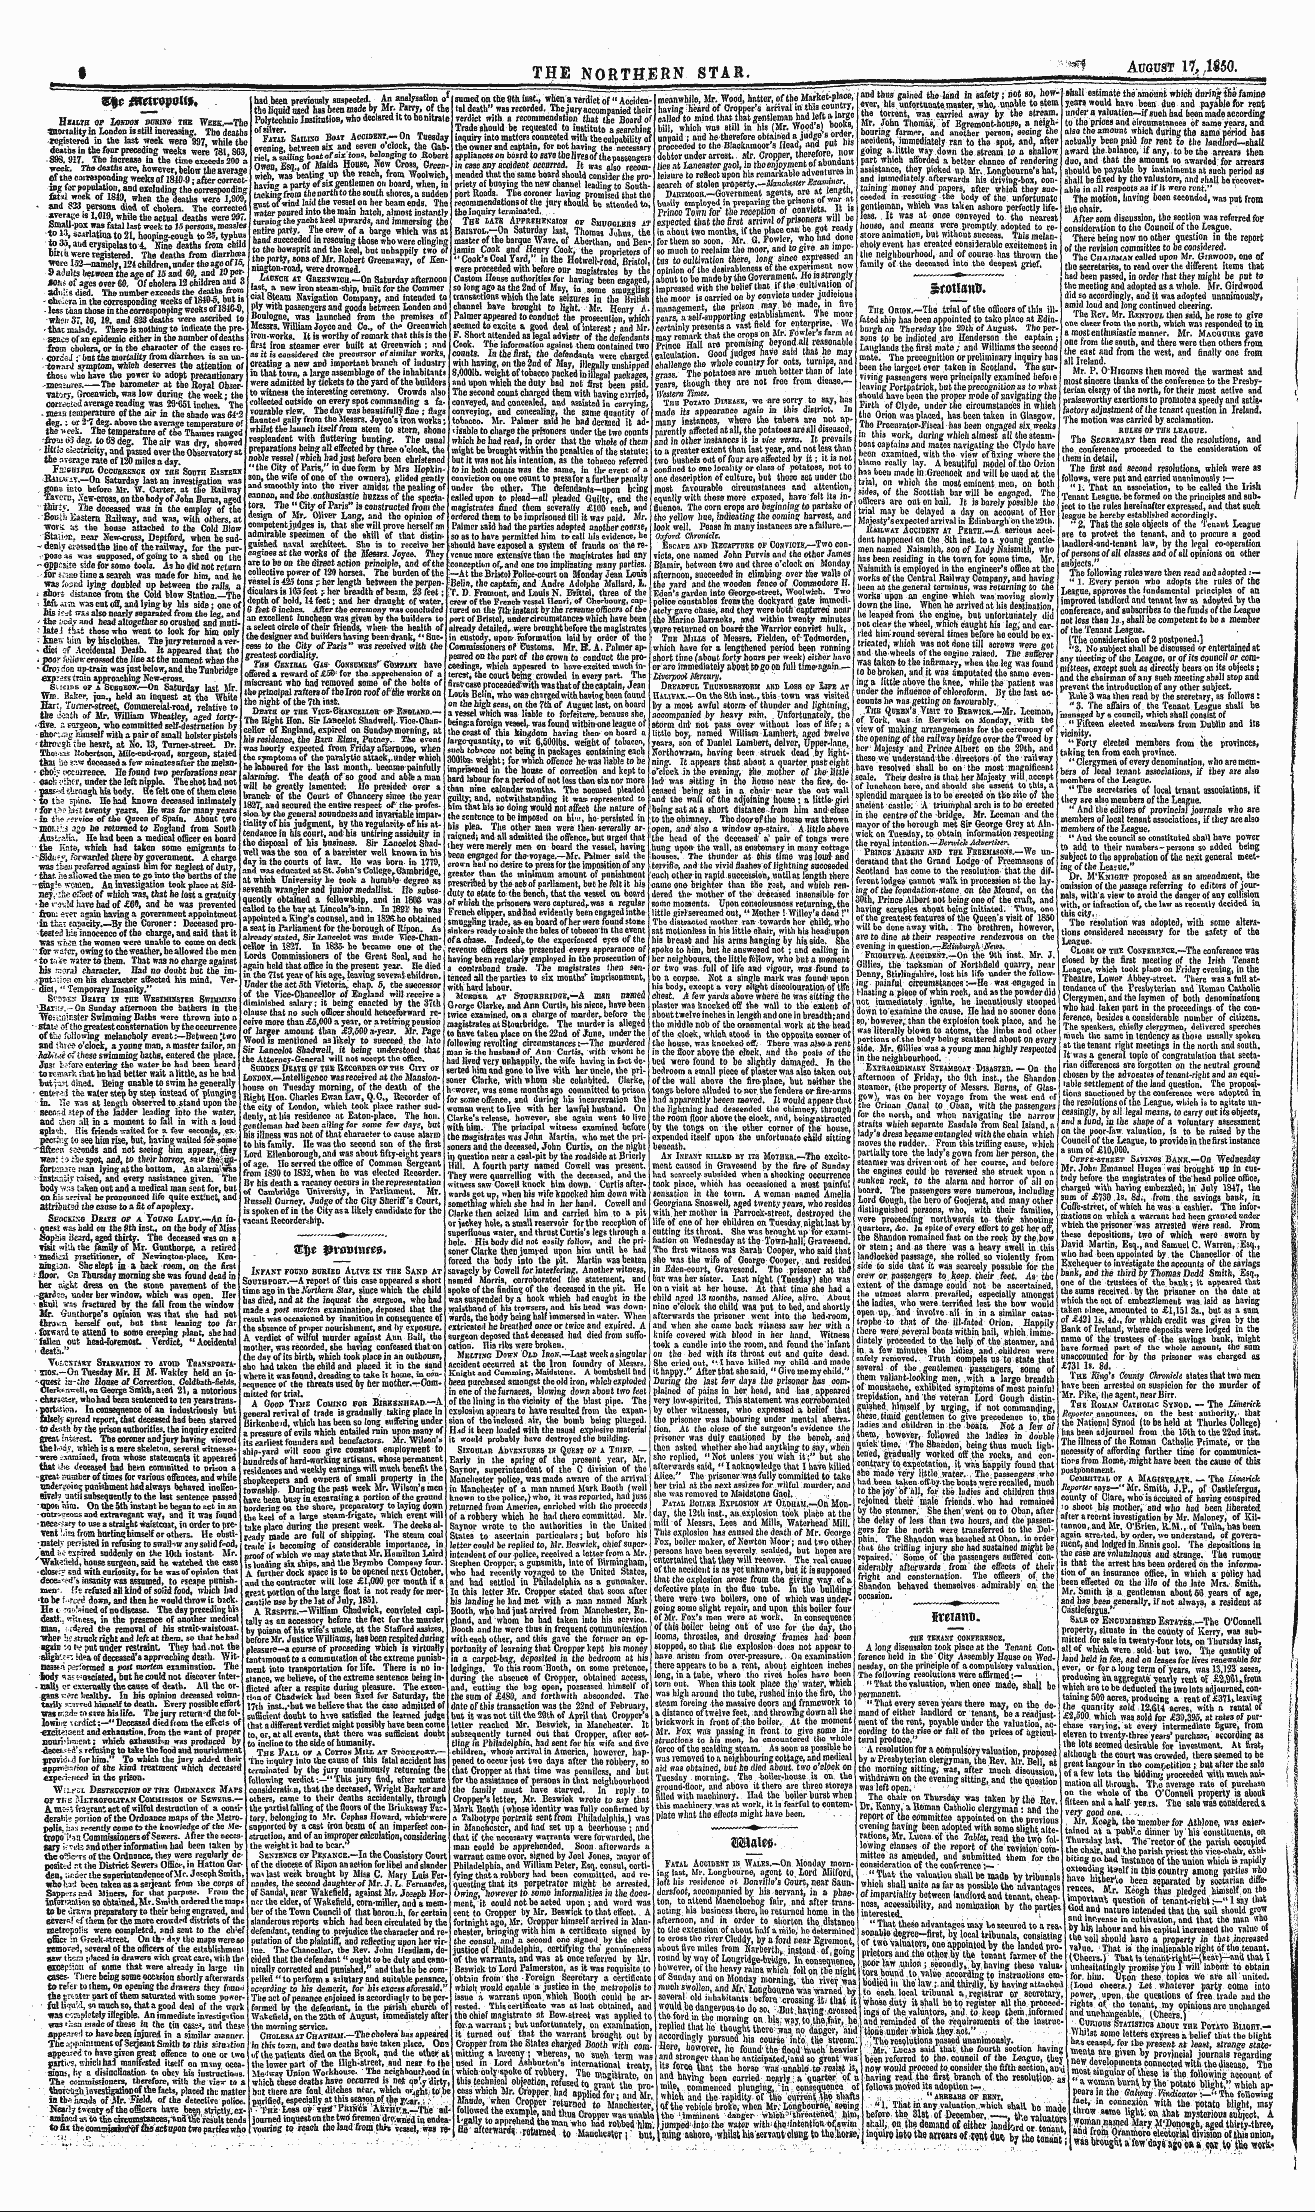 Northern Star (1837-1852): jS F Y, 3rd edition - &T&Gt;E ^ Tfiwnrgjj.